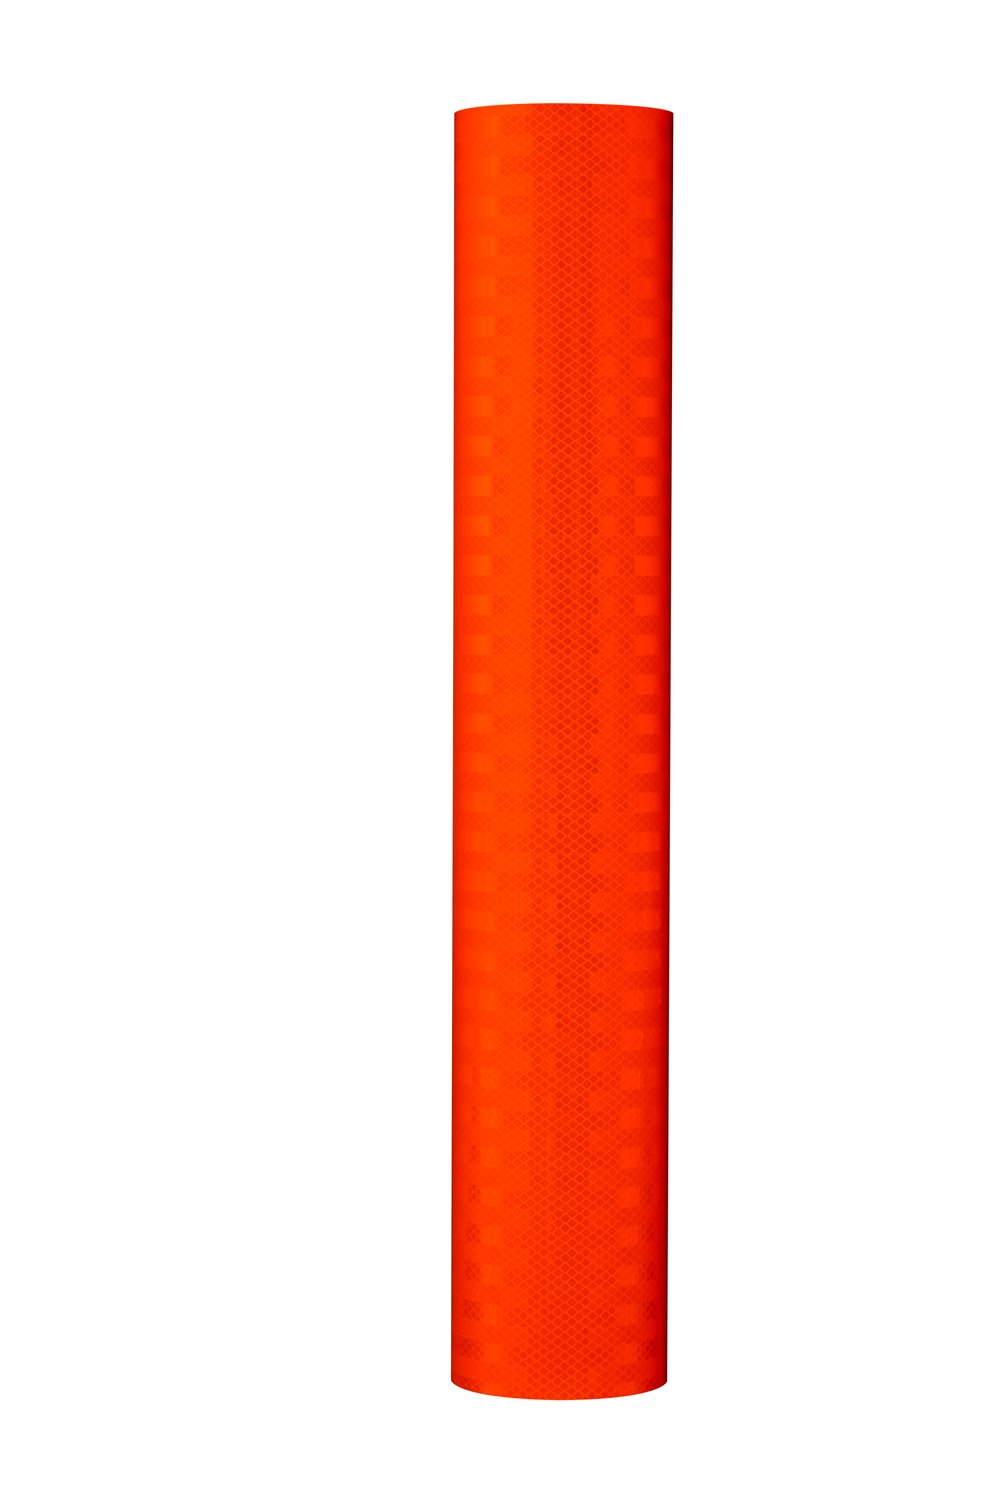 7100134925 - 3M Advanced Flexible Engineer Grade Pre-Striped Barricade Sheeting
7334L Orange/White, 4 in stripe/left, Configurable roll